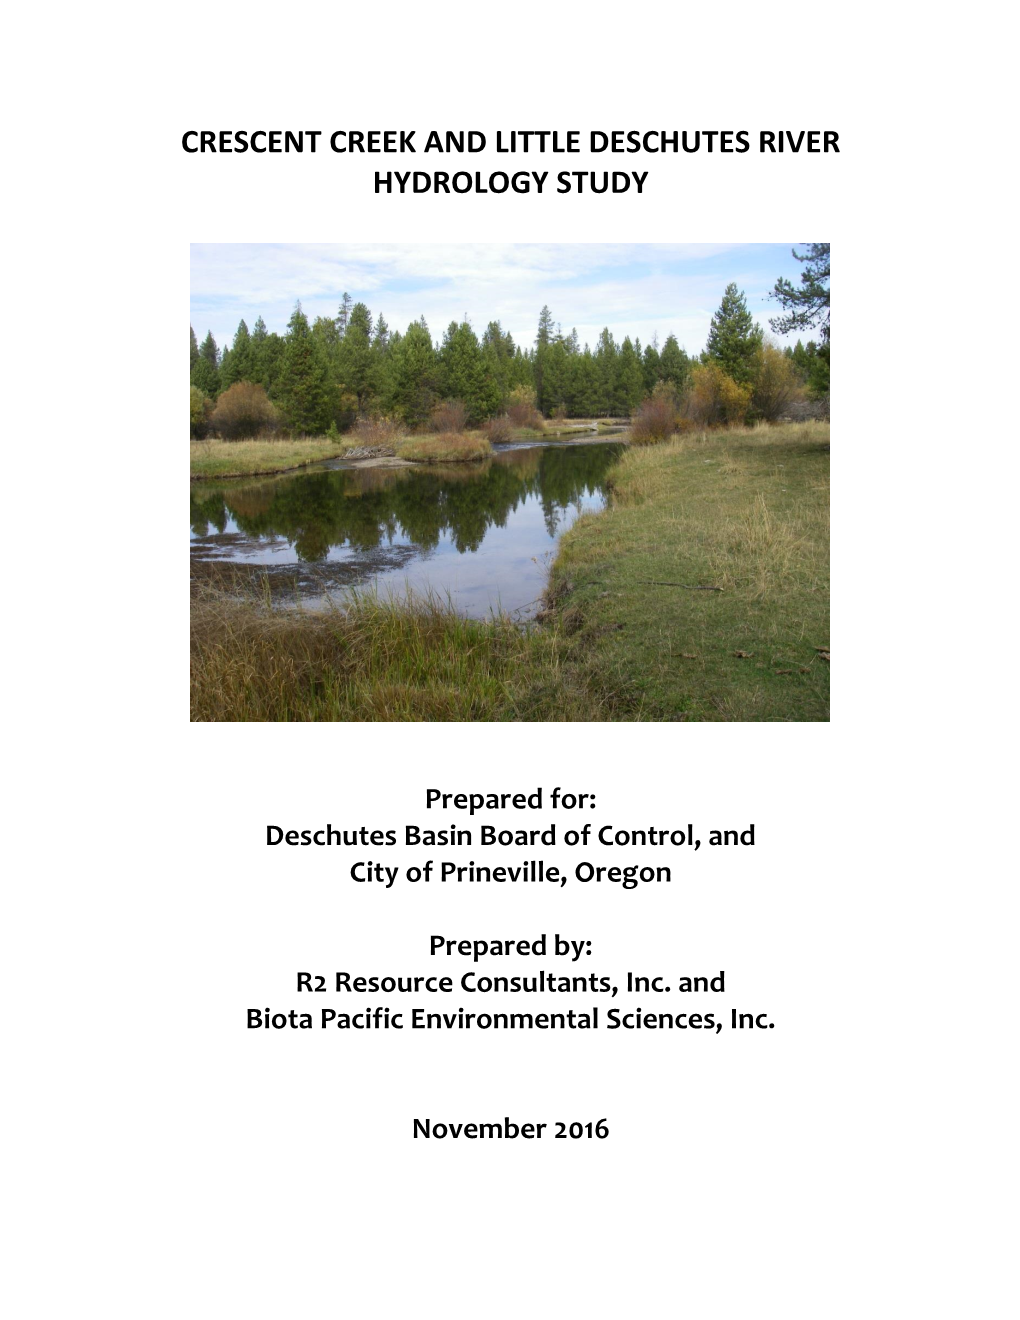 Crescent Creek and Little Deschutes River Hydrology Study